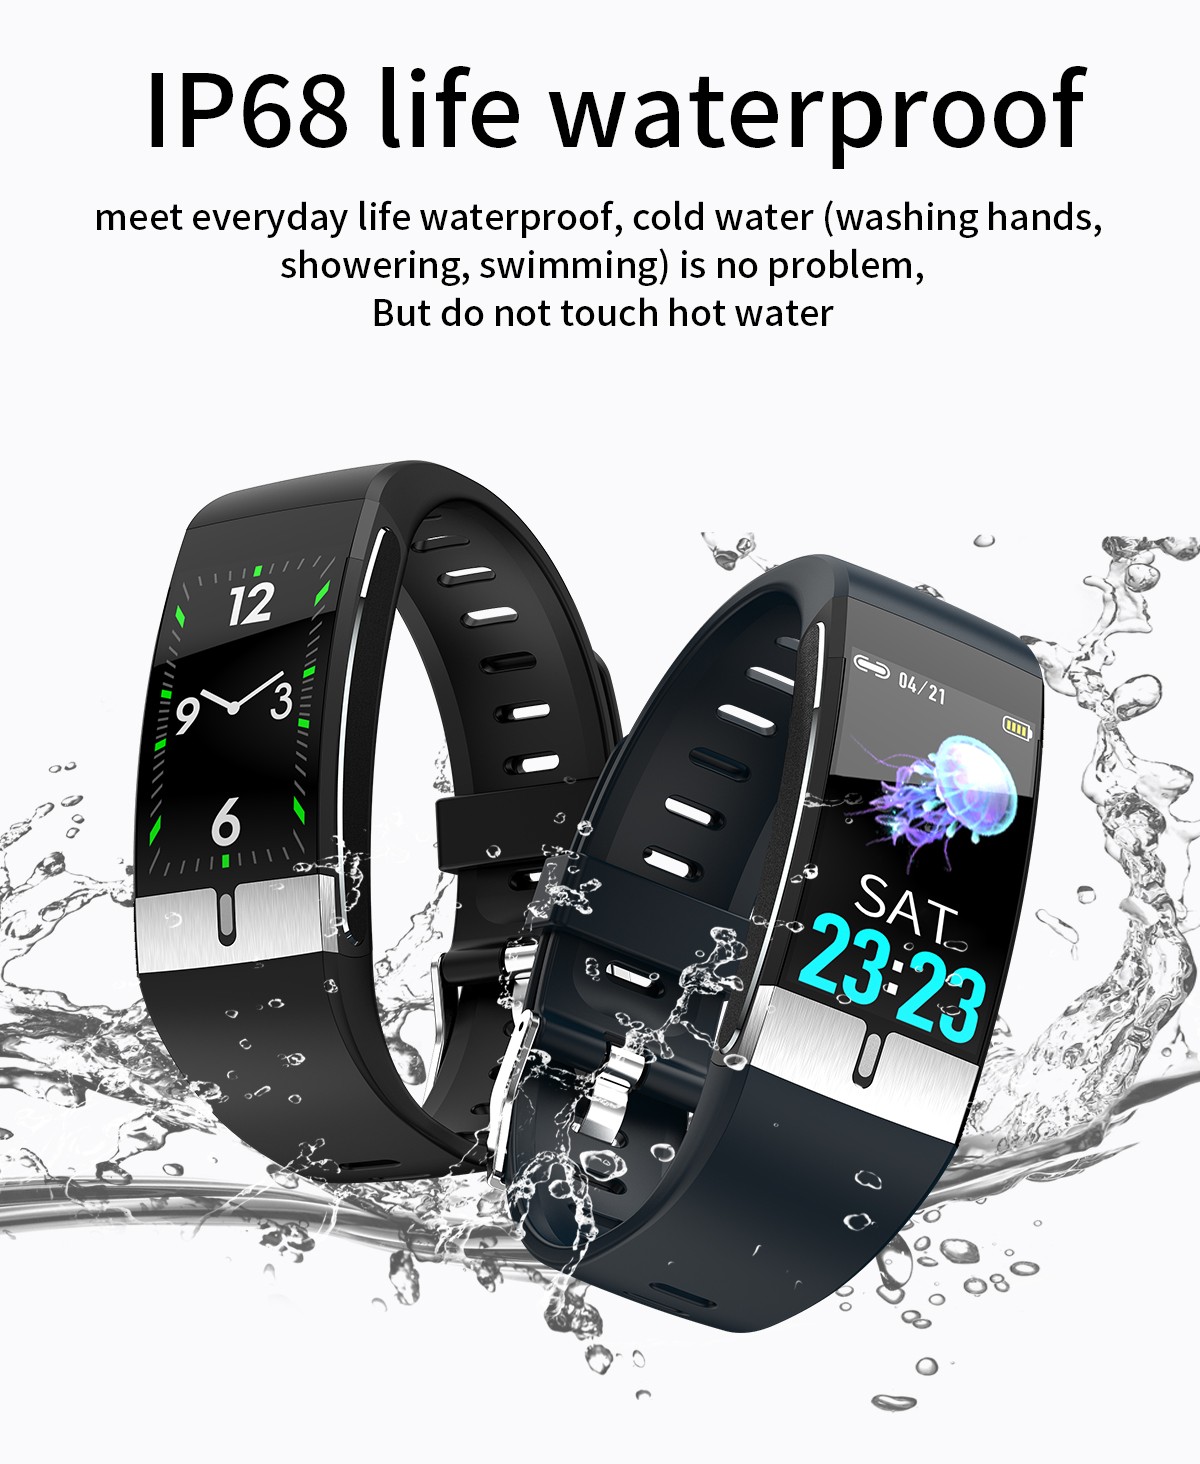 E66 Temperature Measure Smart Watch IP68 life waterproof